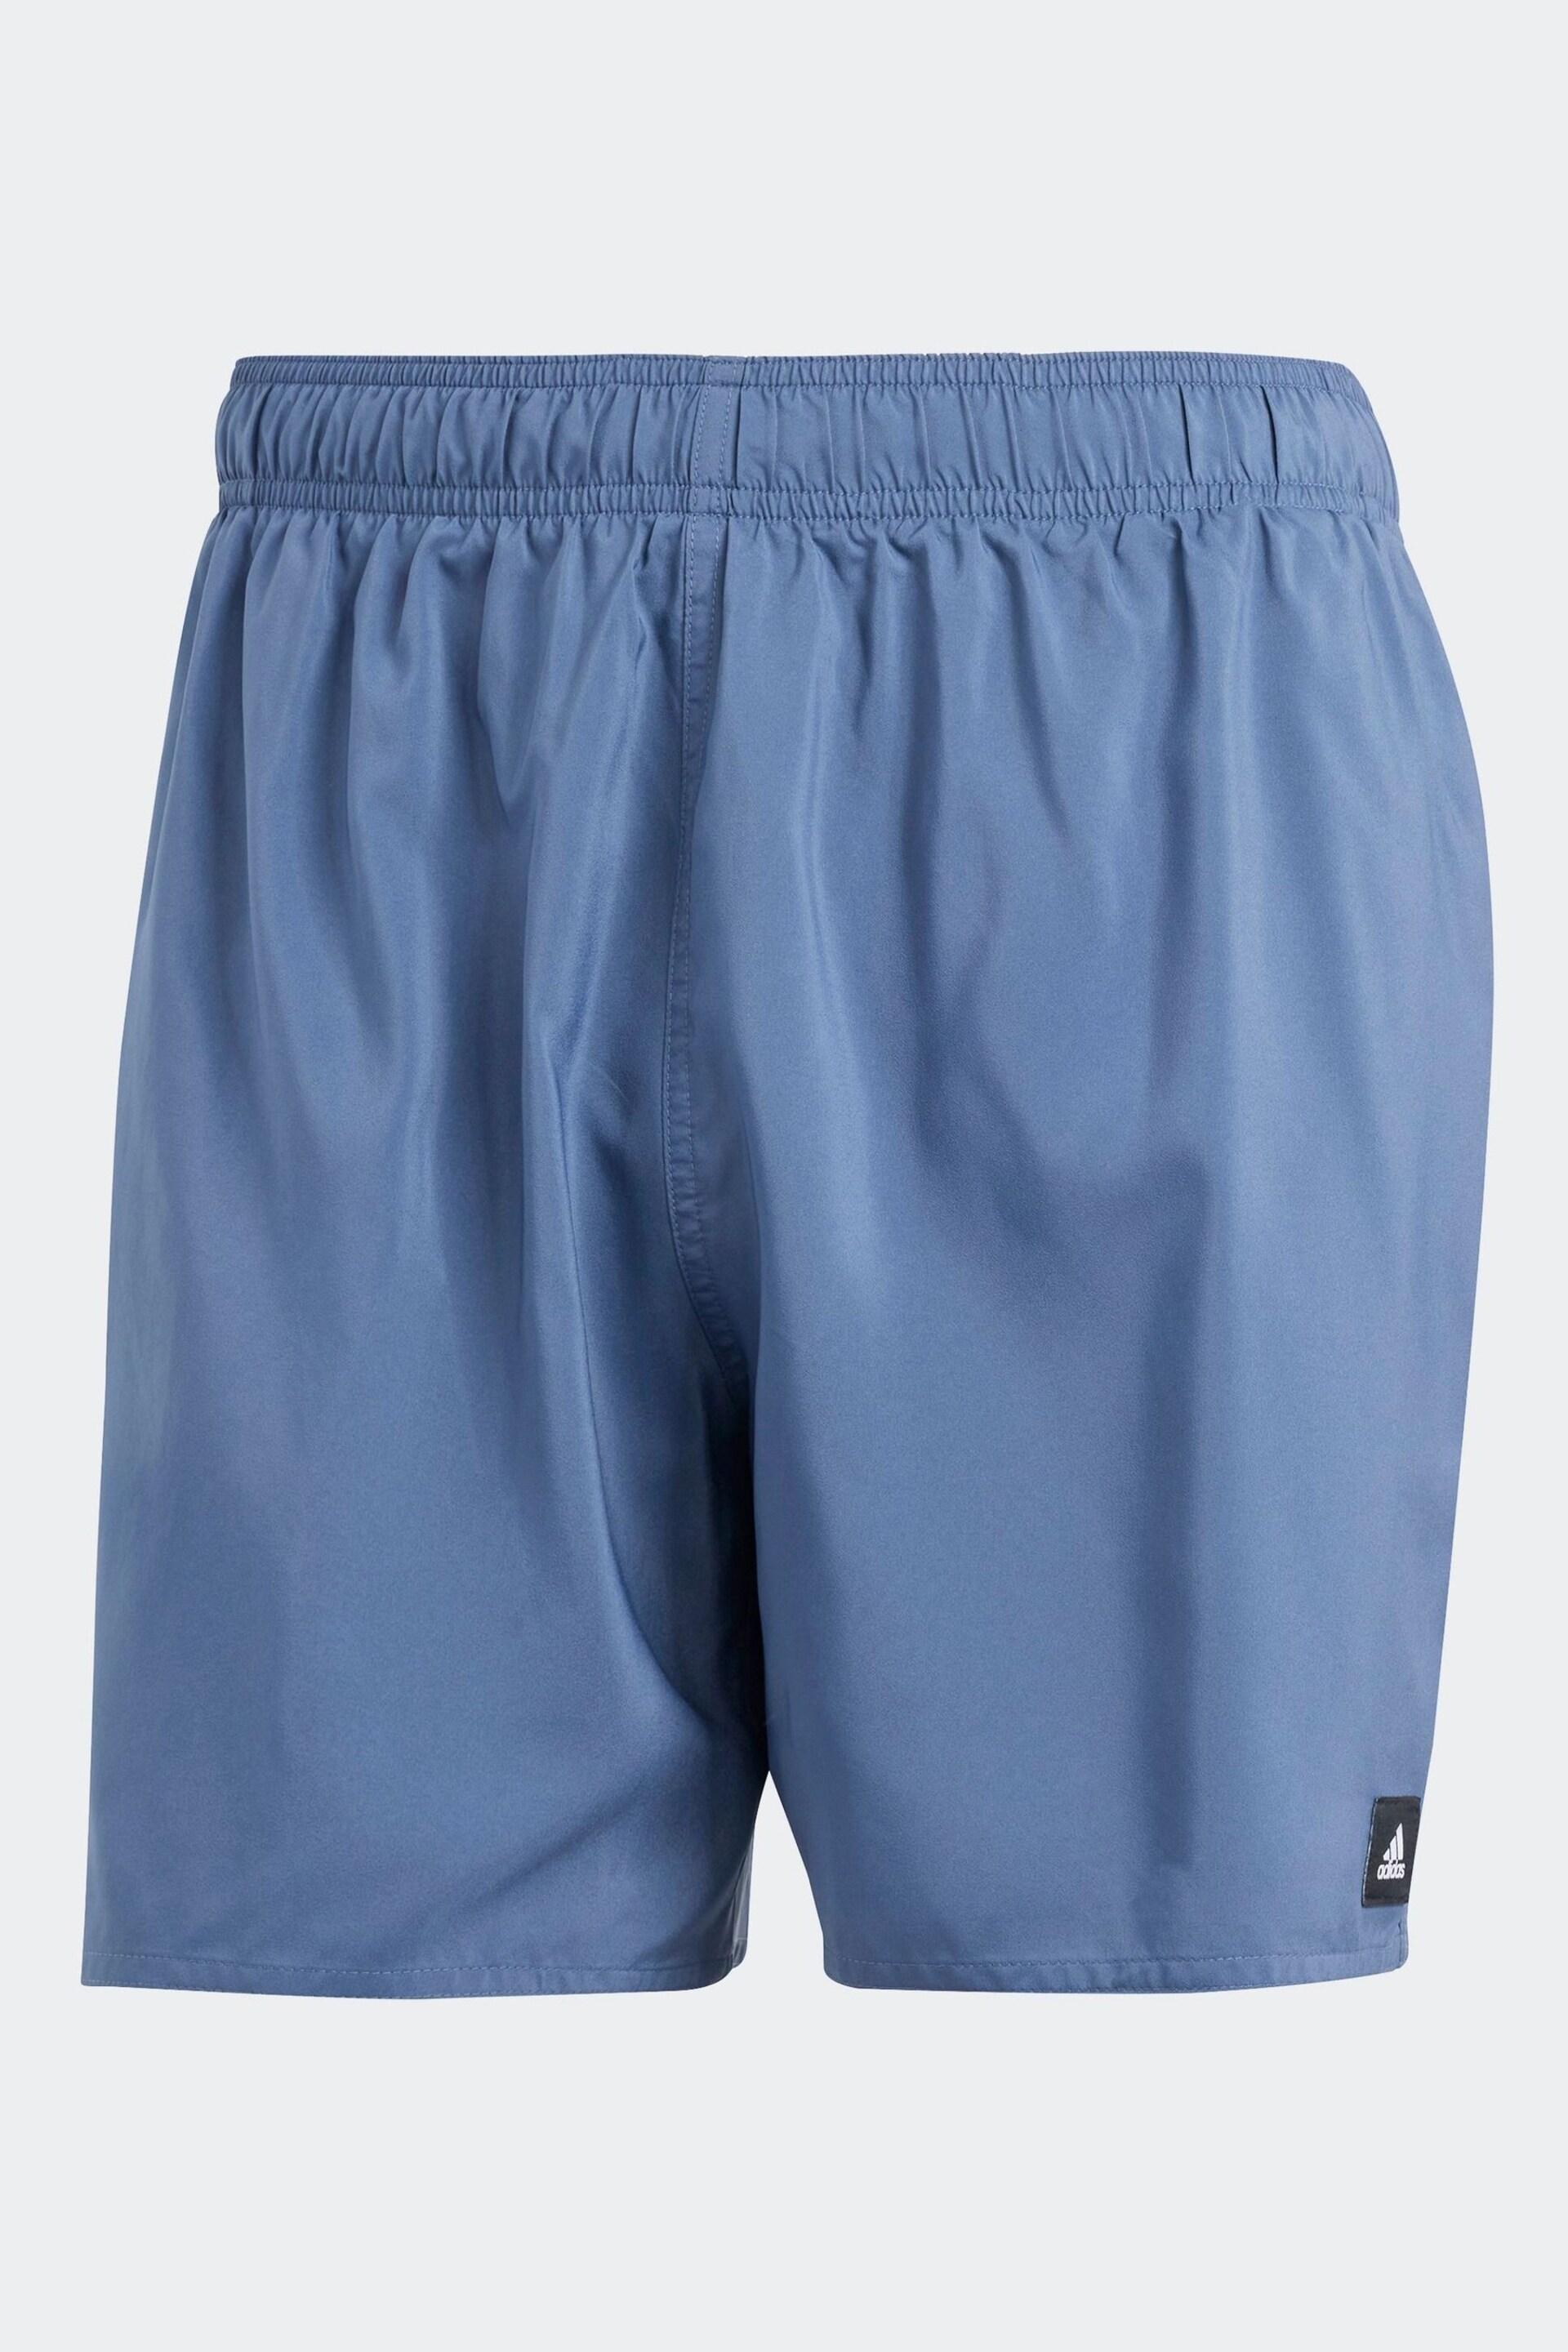 adidas Blue Performance Solid Clx Short-Length Swim Shorts - Image 6 of 6